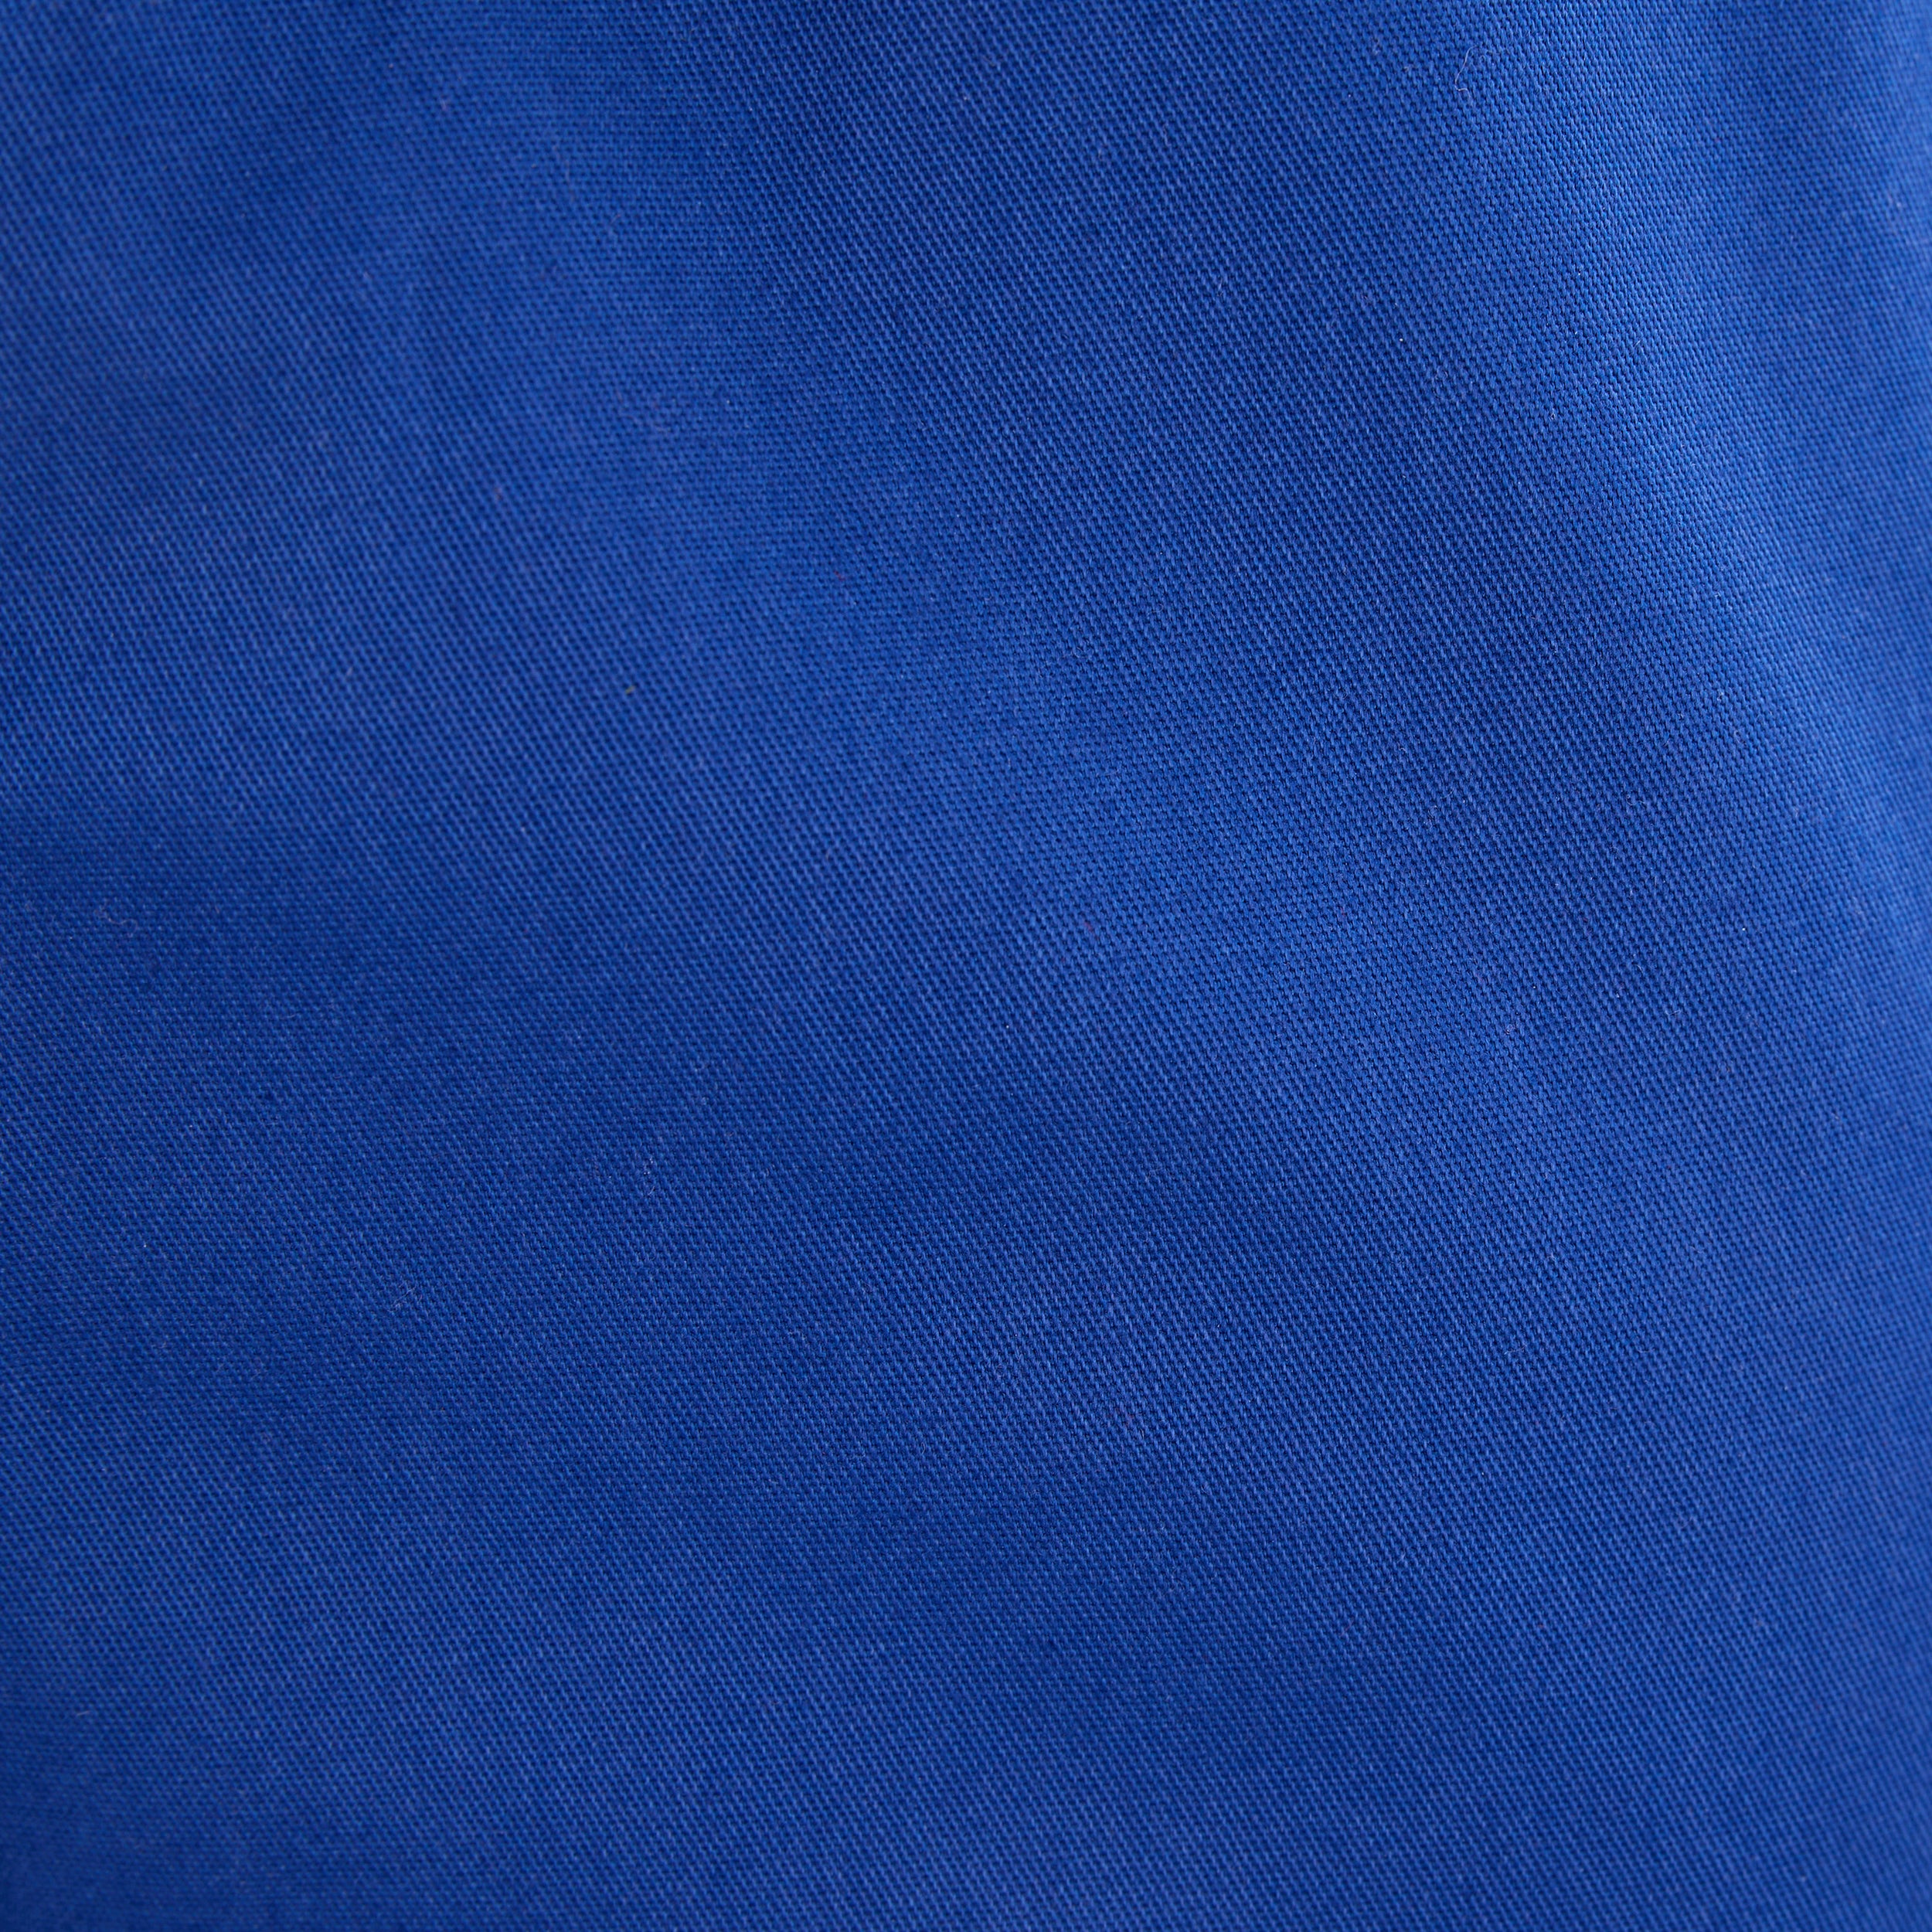 close up of blue fabric